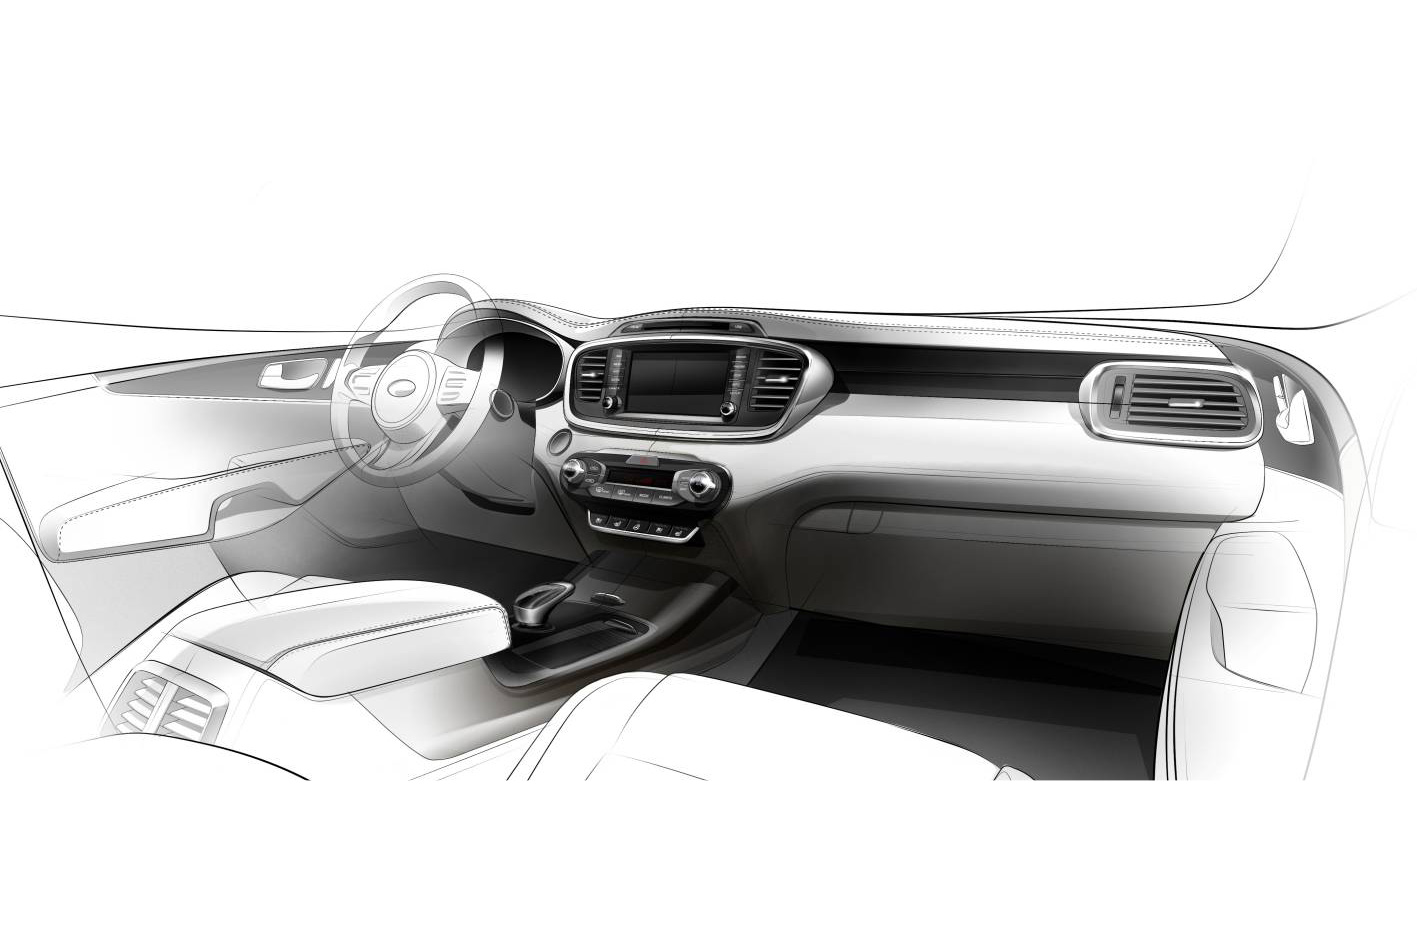 2015 Kia Sorento interior previewed